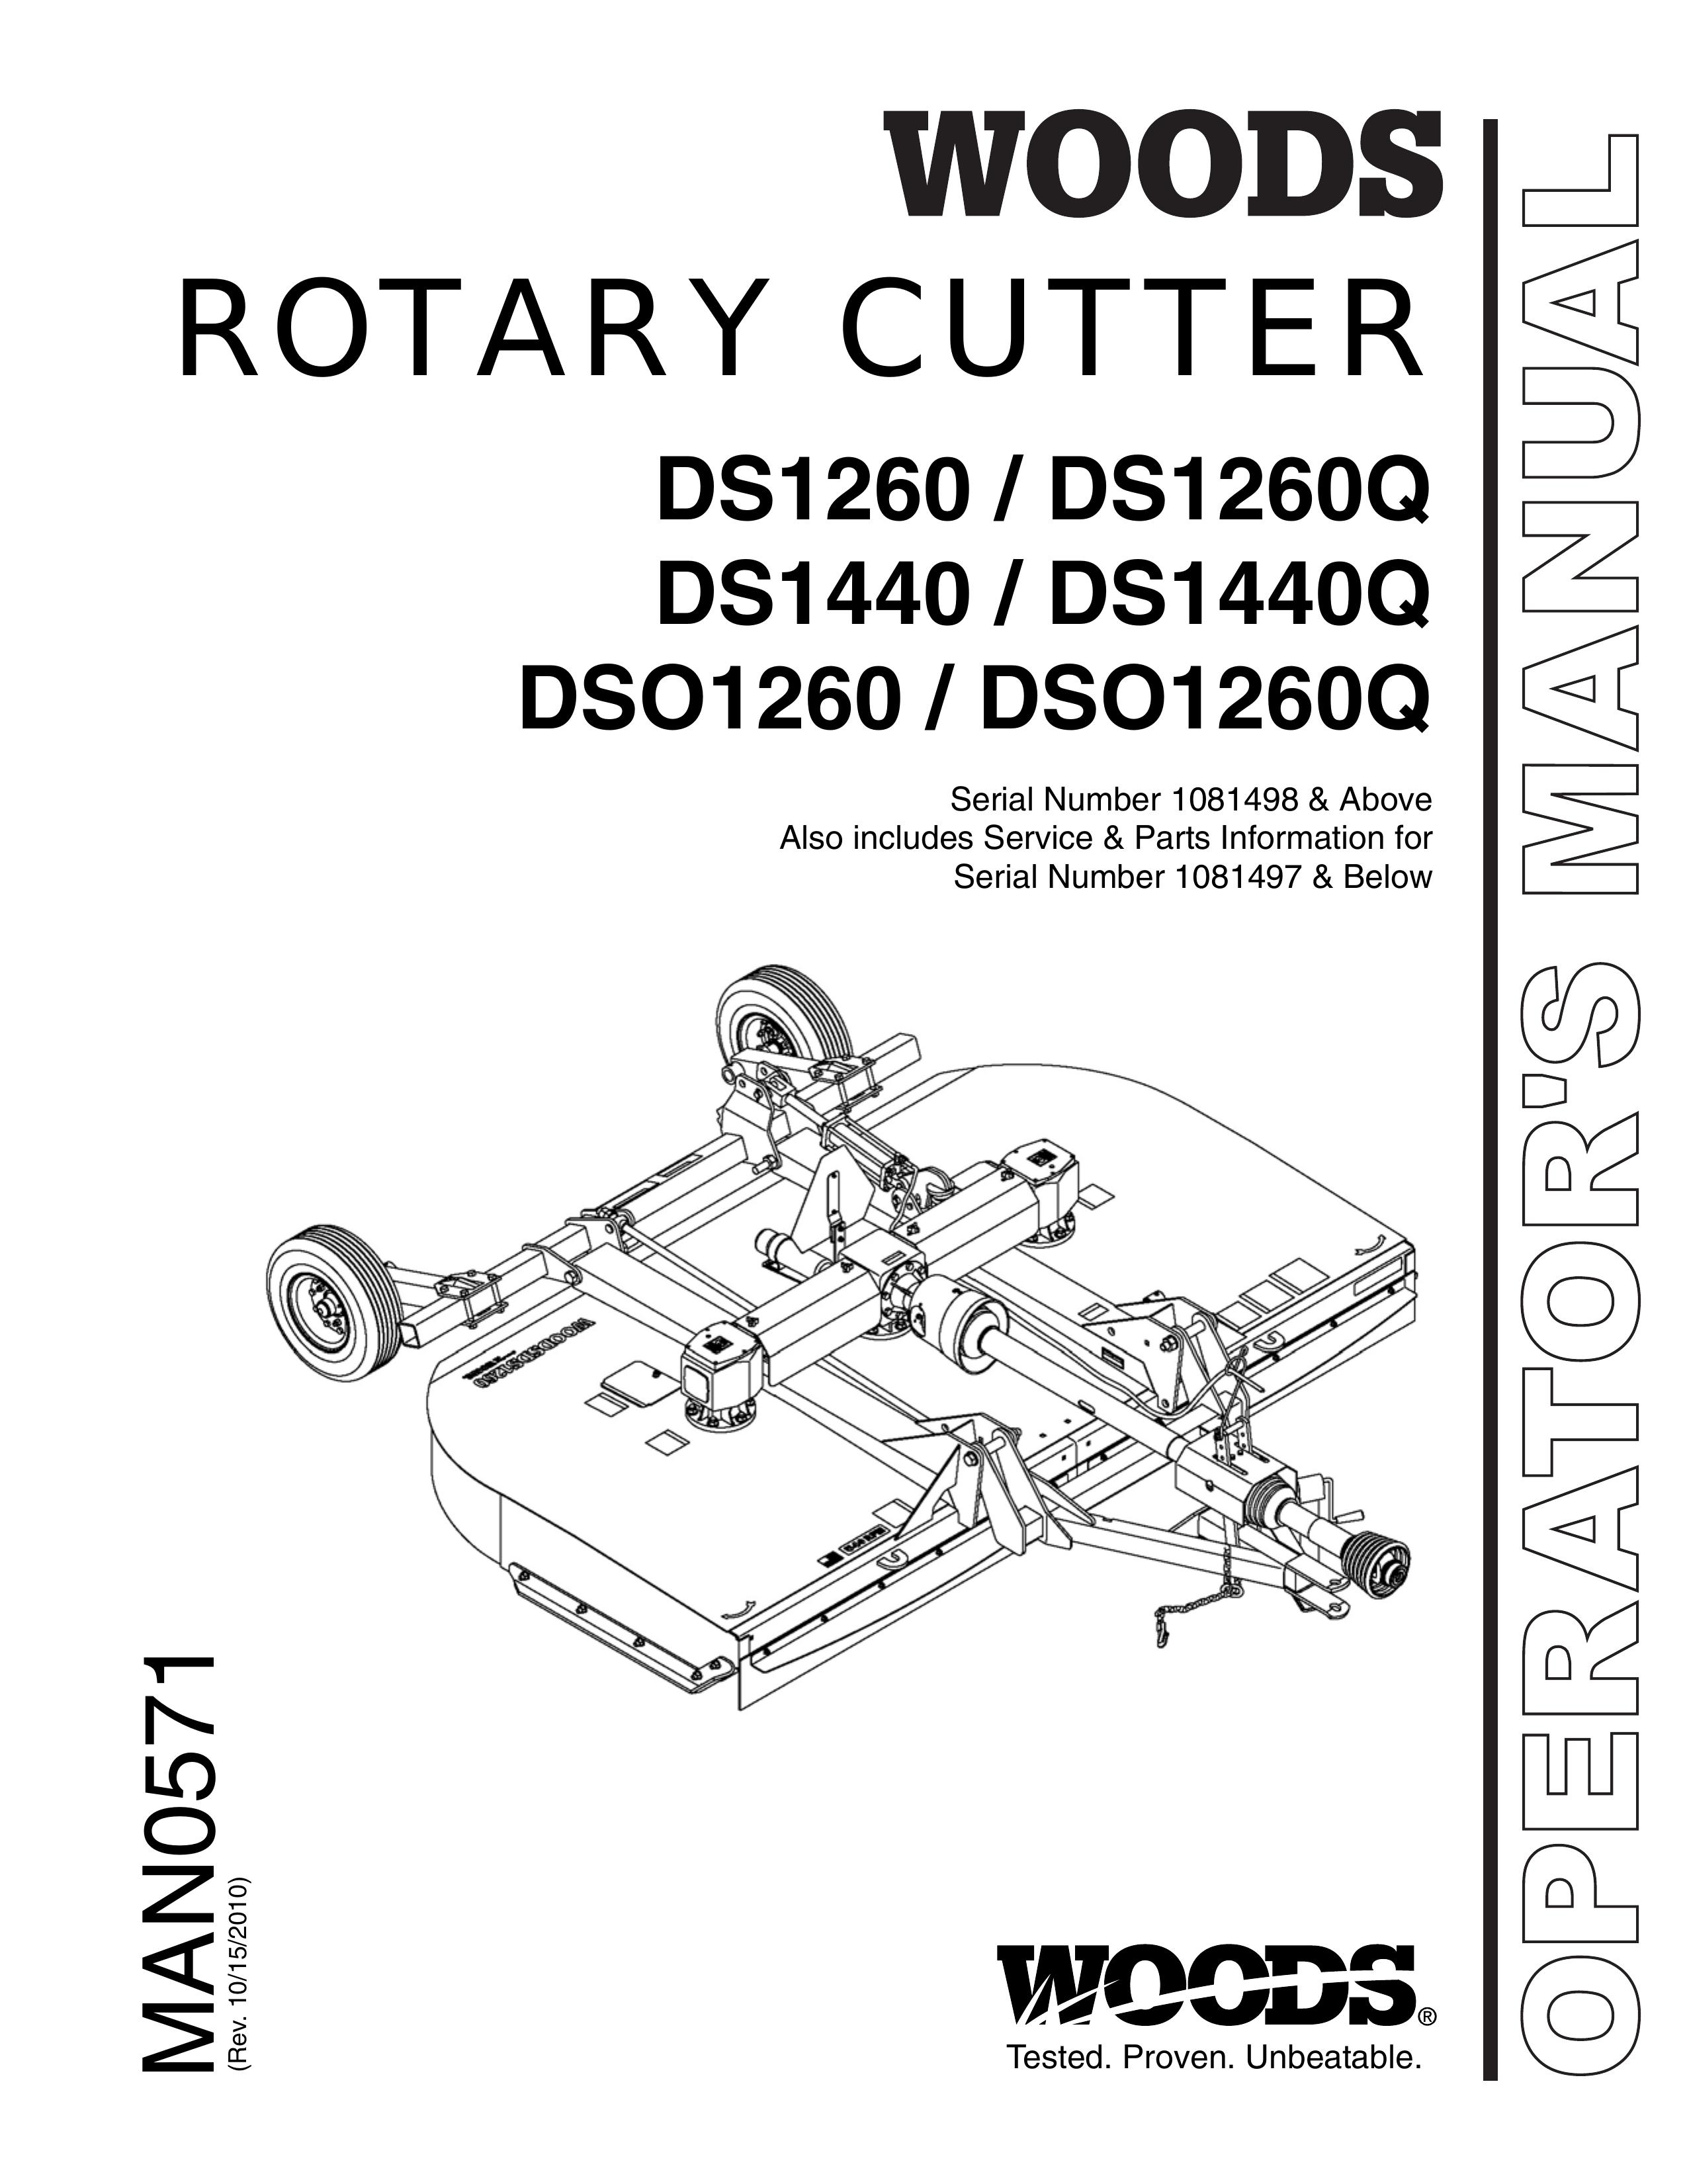 Woods Equipment DSO1260Q Brush Cutter User Manual